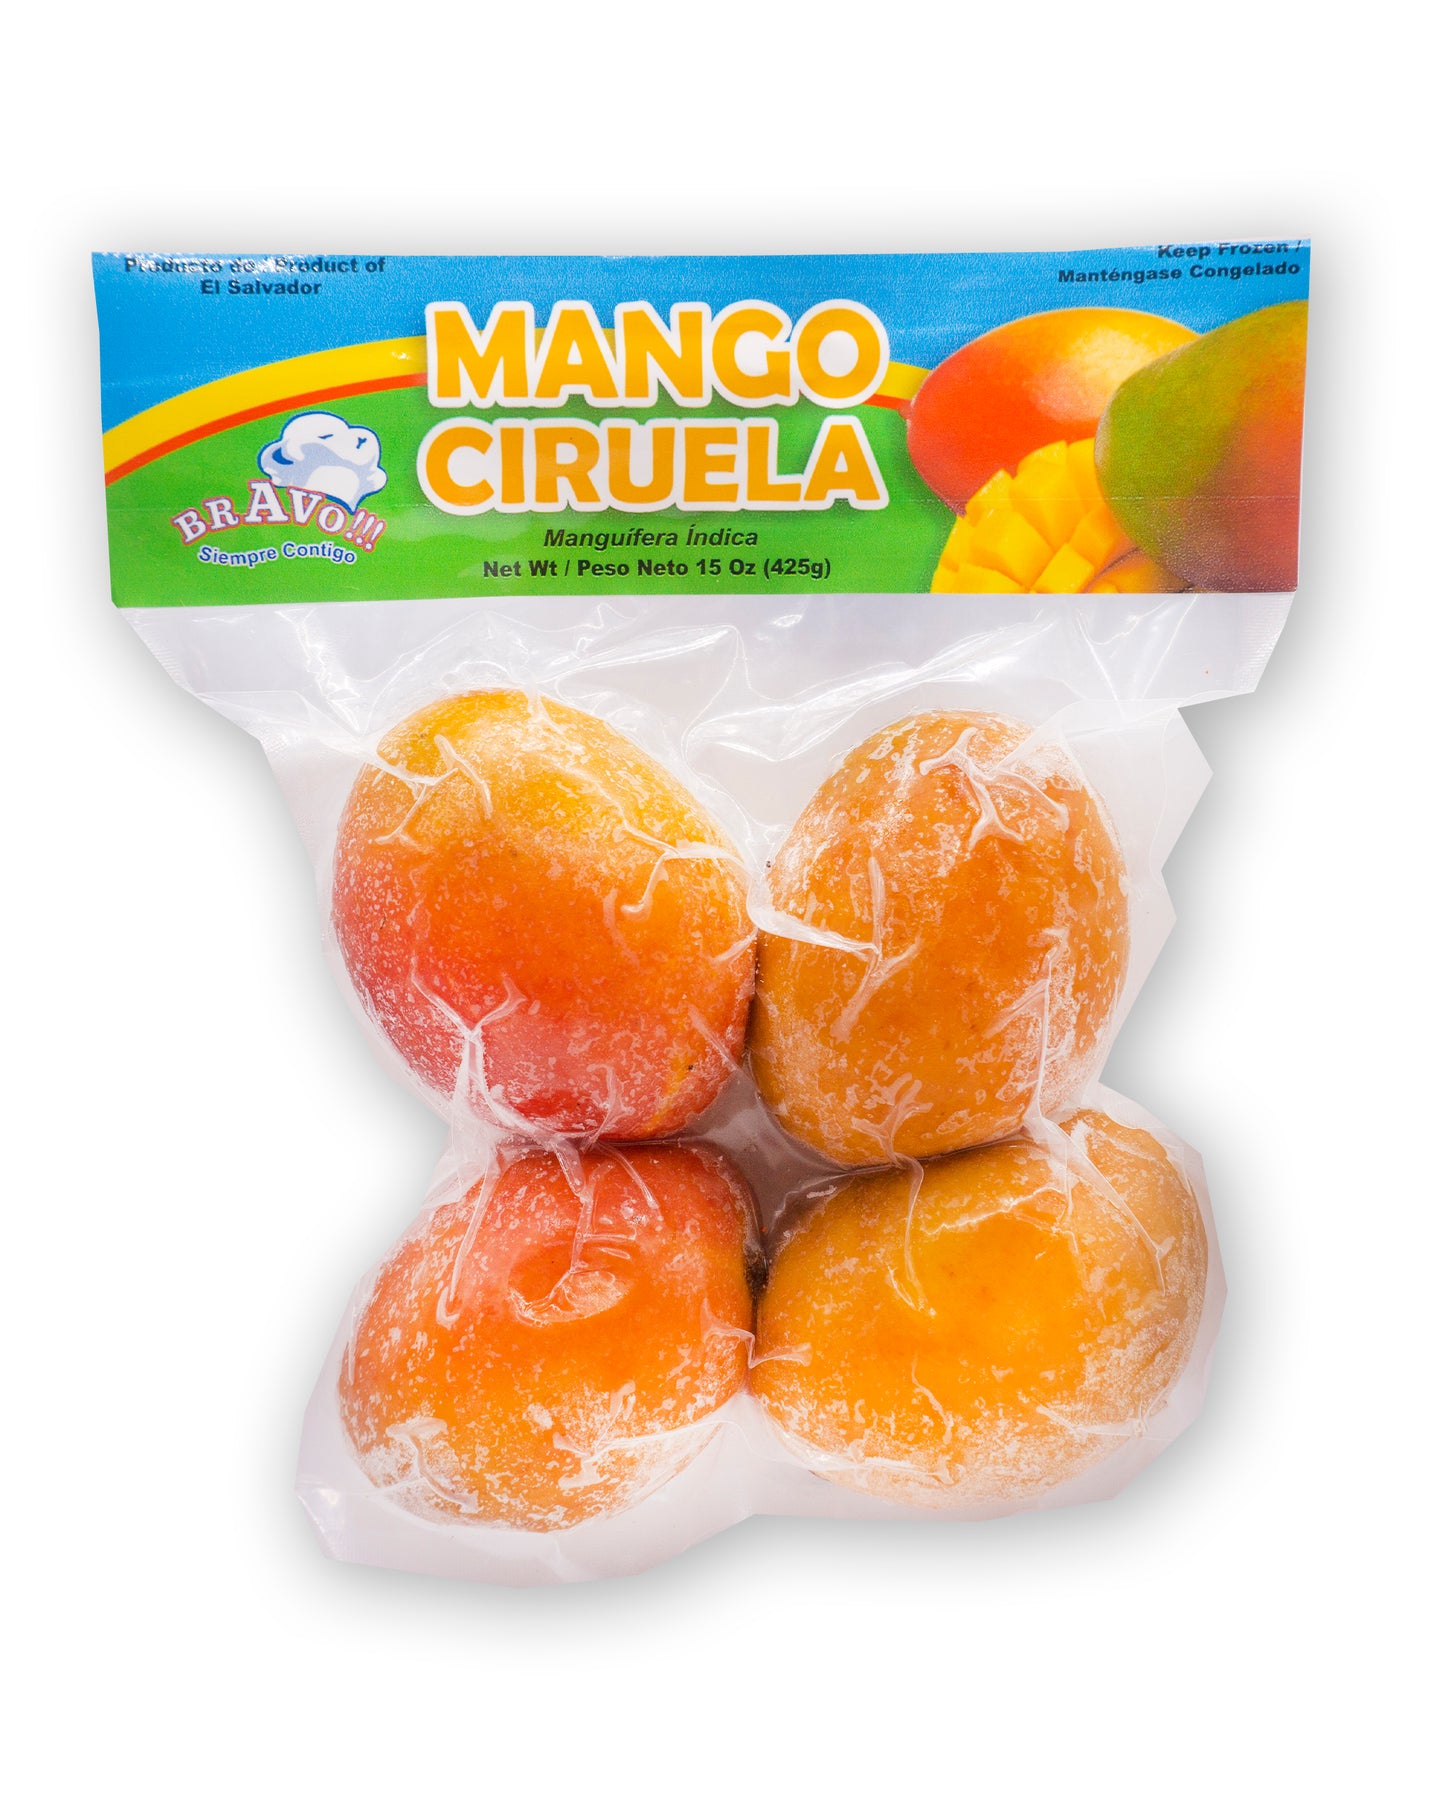 Mango Ciruela Bravo 15 oz